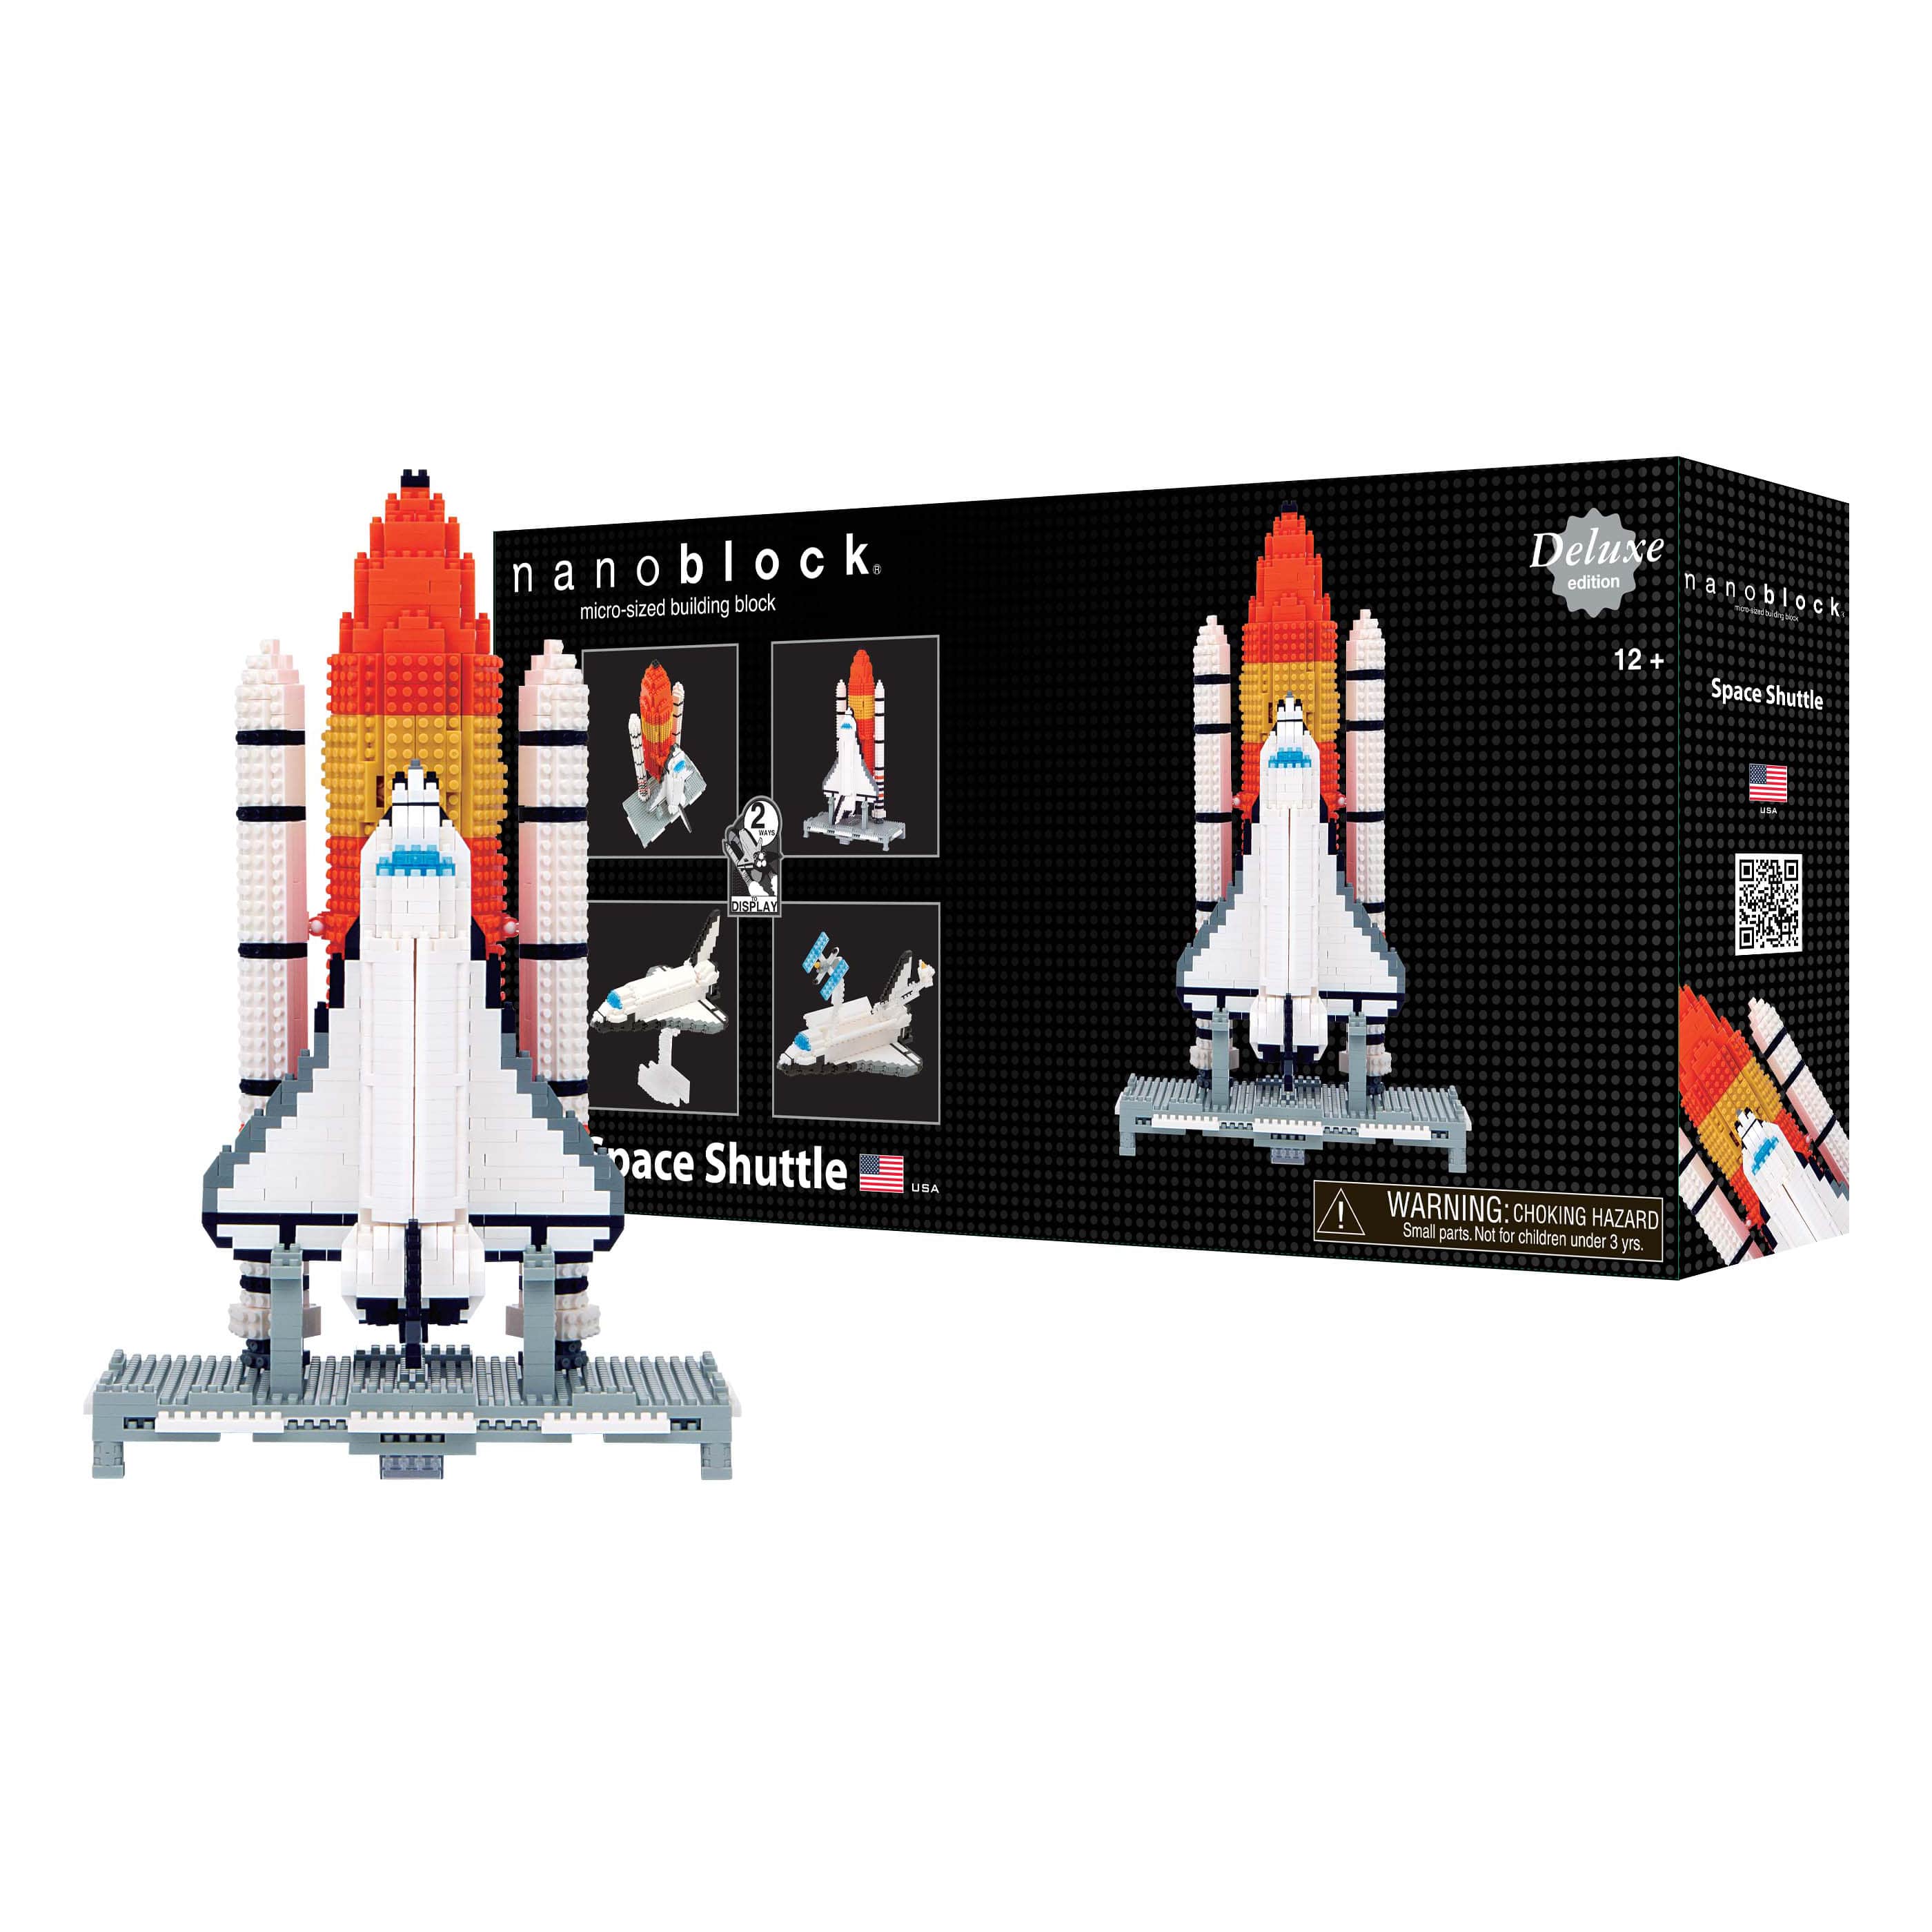 nanoblock Deluxe Edition Level 6 - Space Shuttle: 1600 Pcs